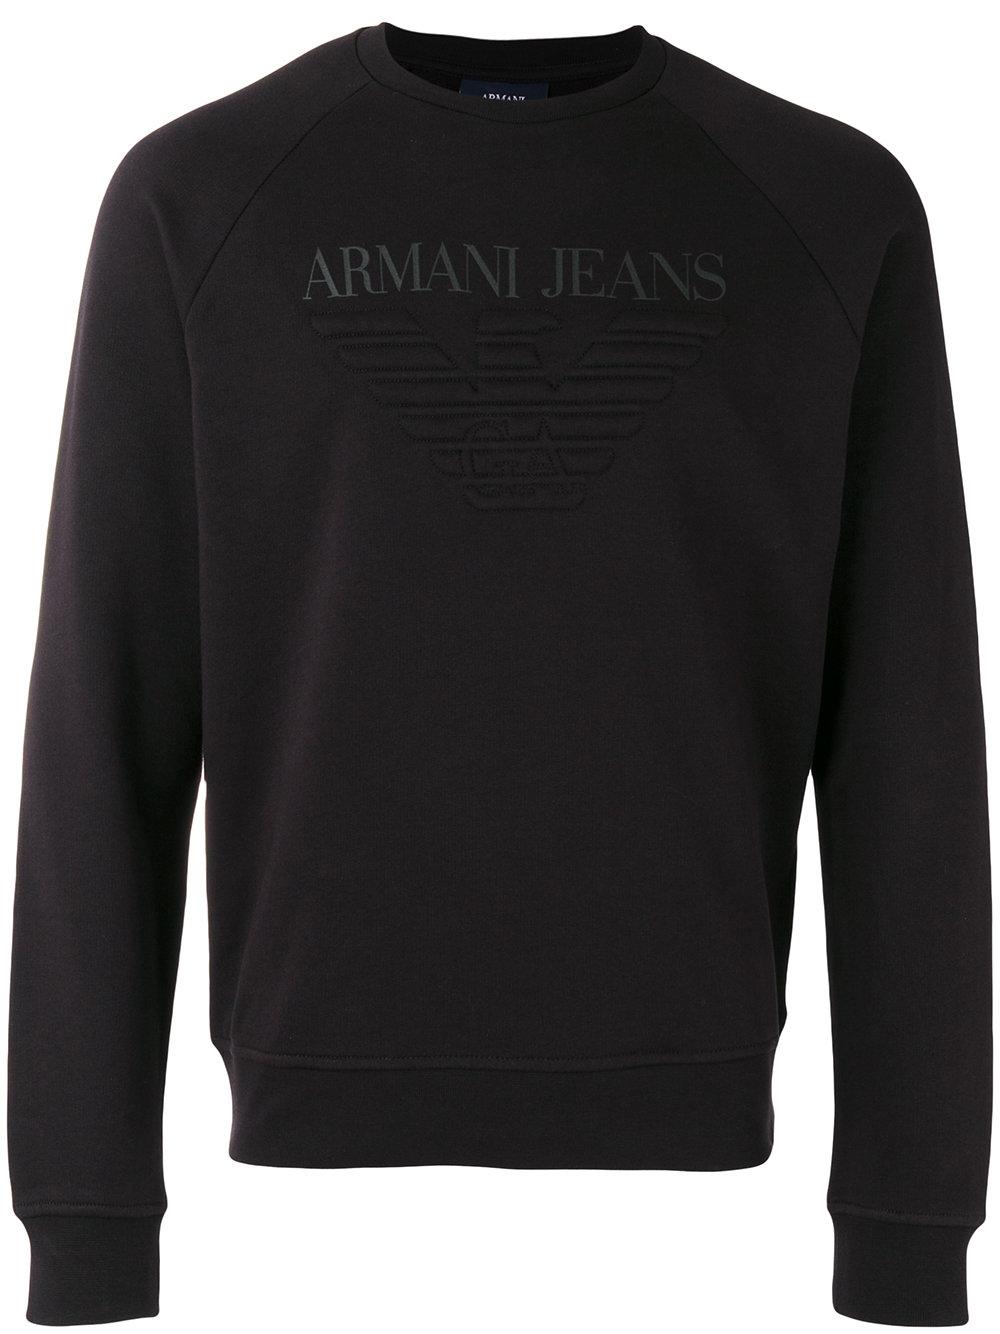 Armani jeans Logo Print Sweatshirt in Black for Men | Lyst